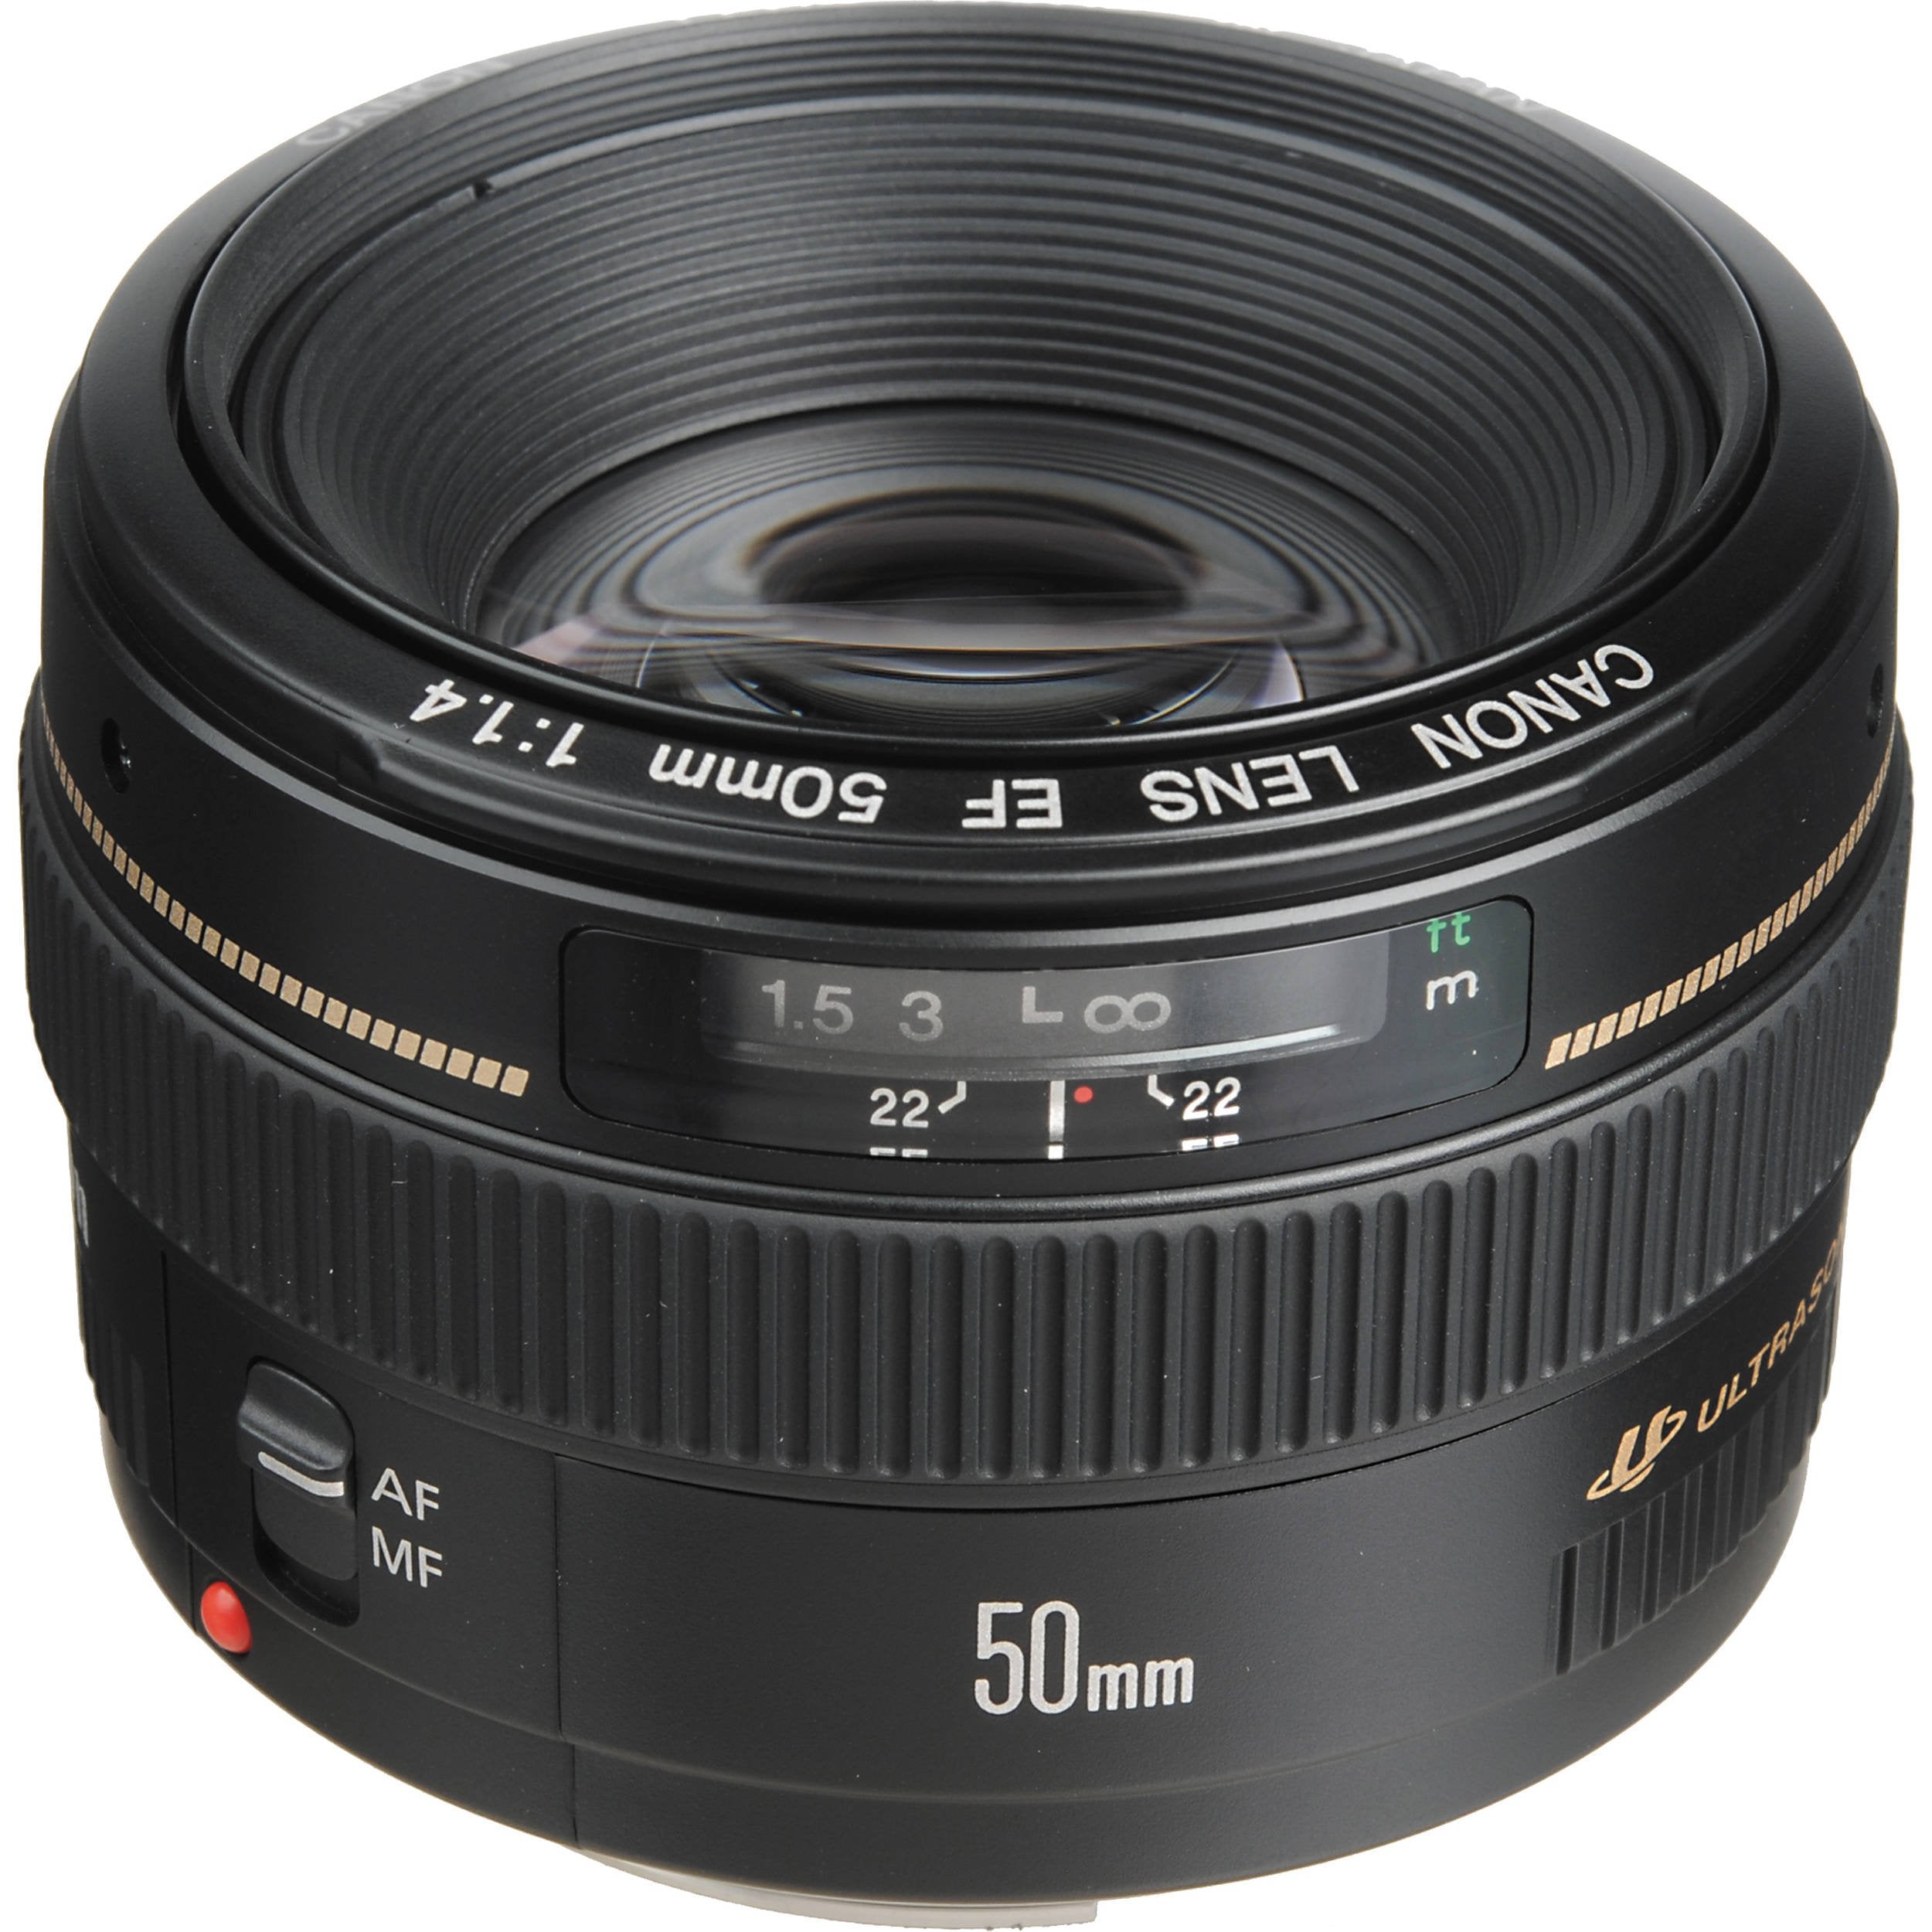 Canon EF 50 1.4 USM 58MM Lens (International Model) + Cleaning Kit